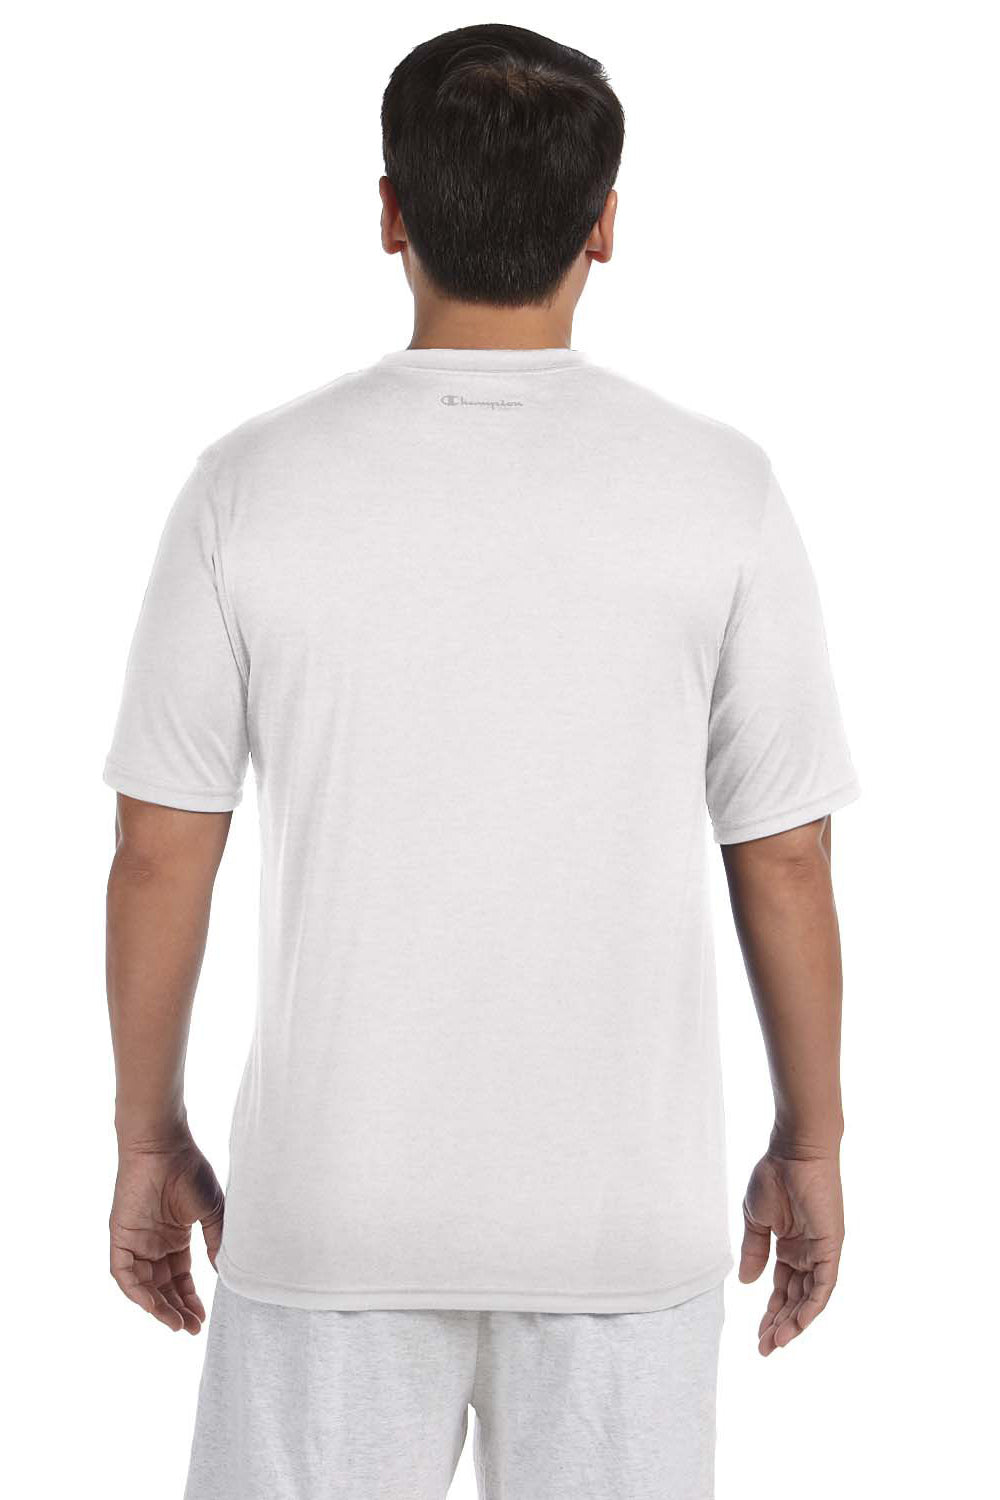 Champion CW22 Mens Double Dry Moisture Wicking Short Sleeve Crewneck T-Shirt White Back